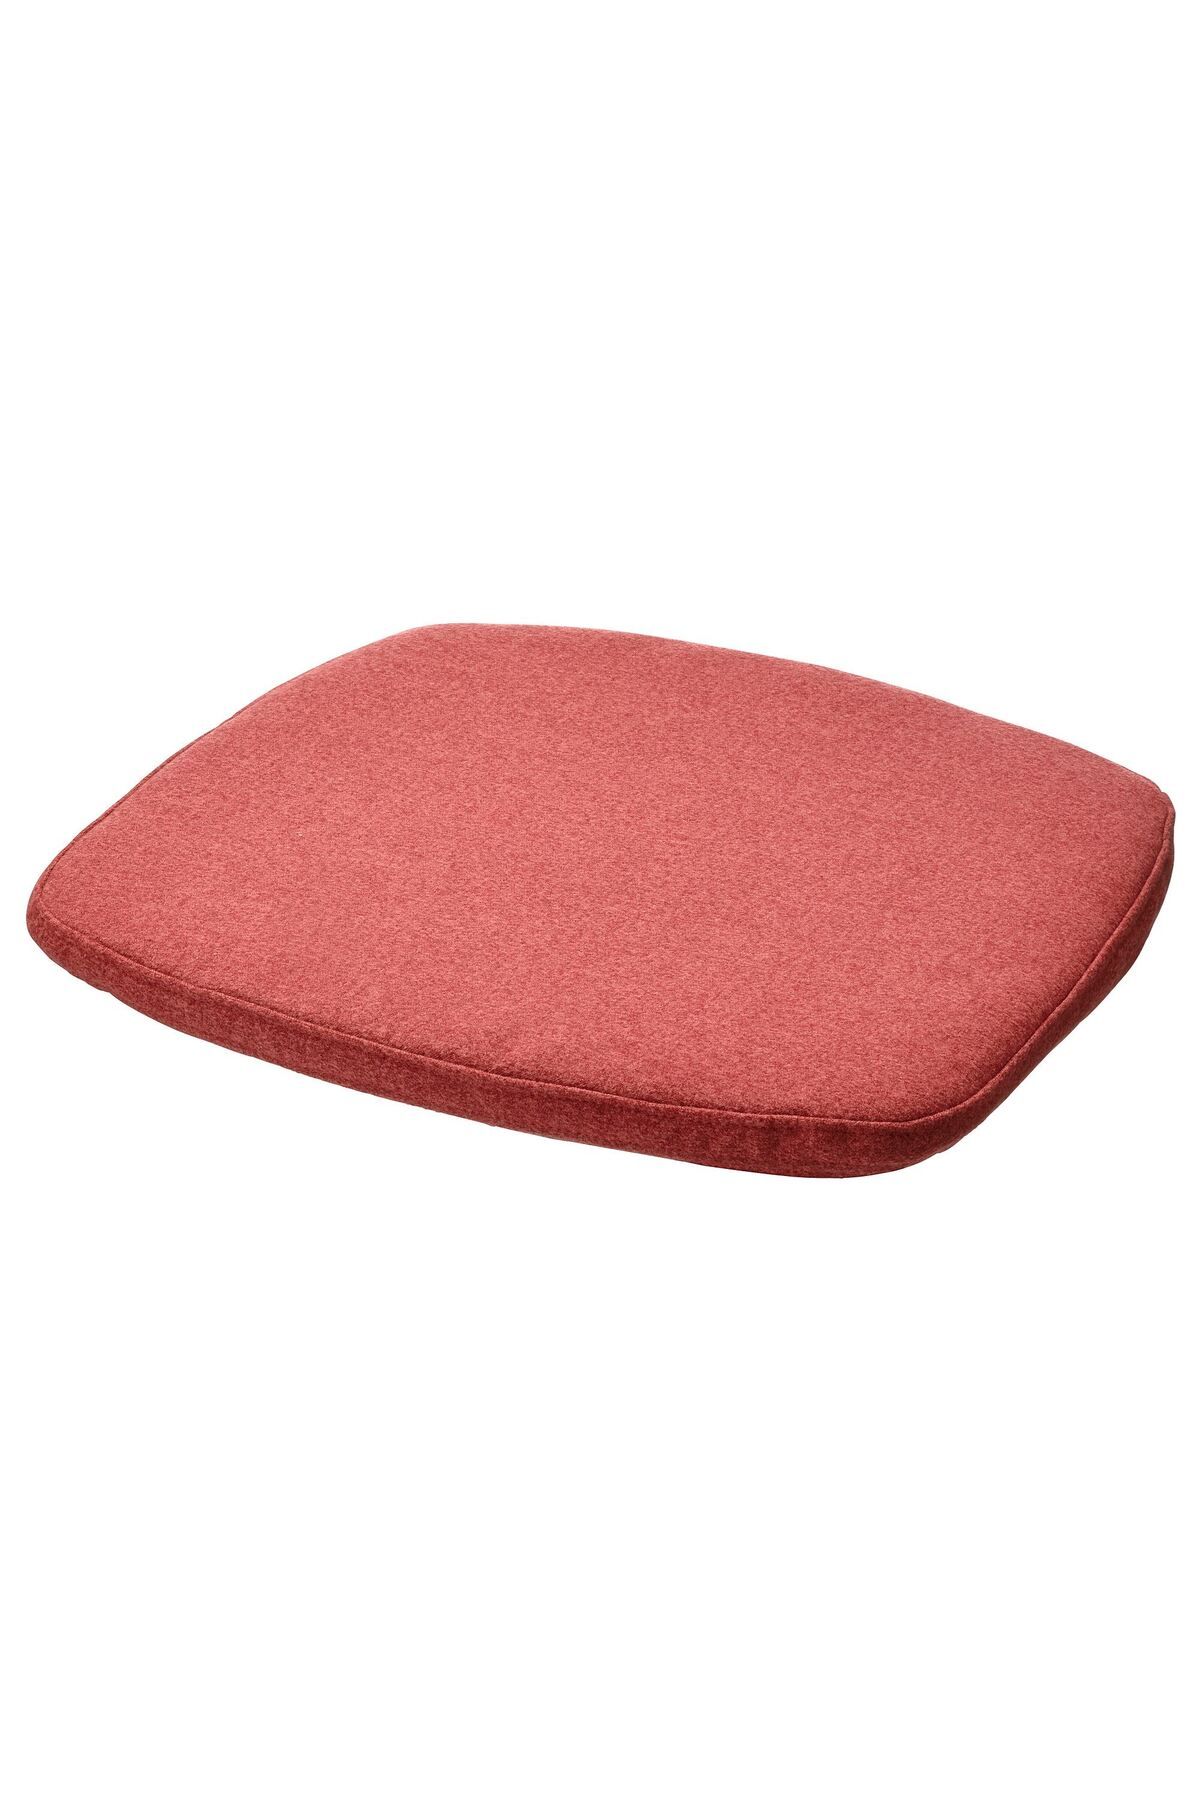 IKEA ÄLVGRÄSMAL sandalye minderi, kırmızı